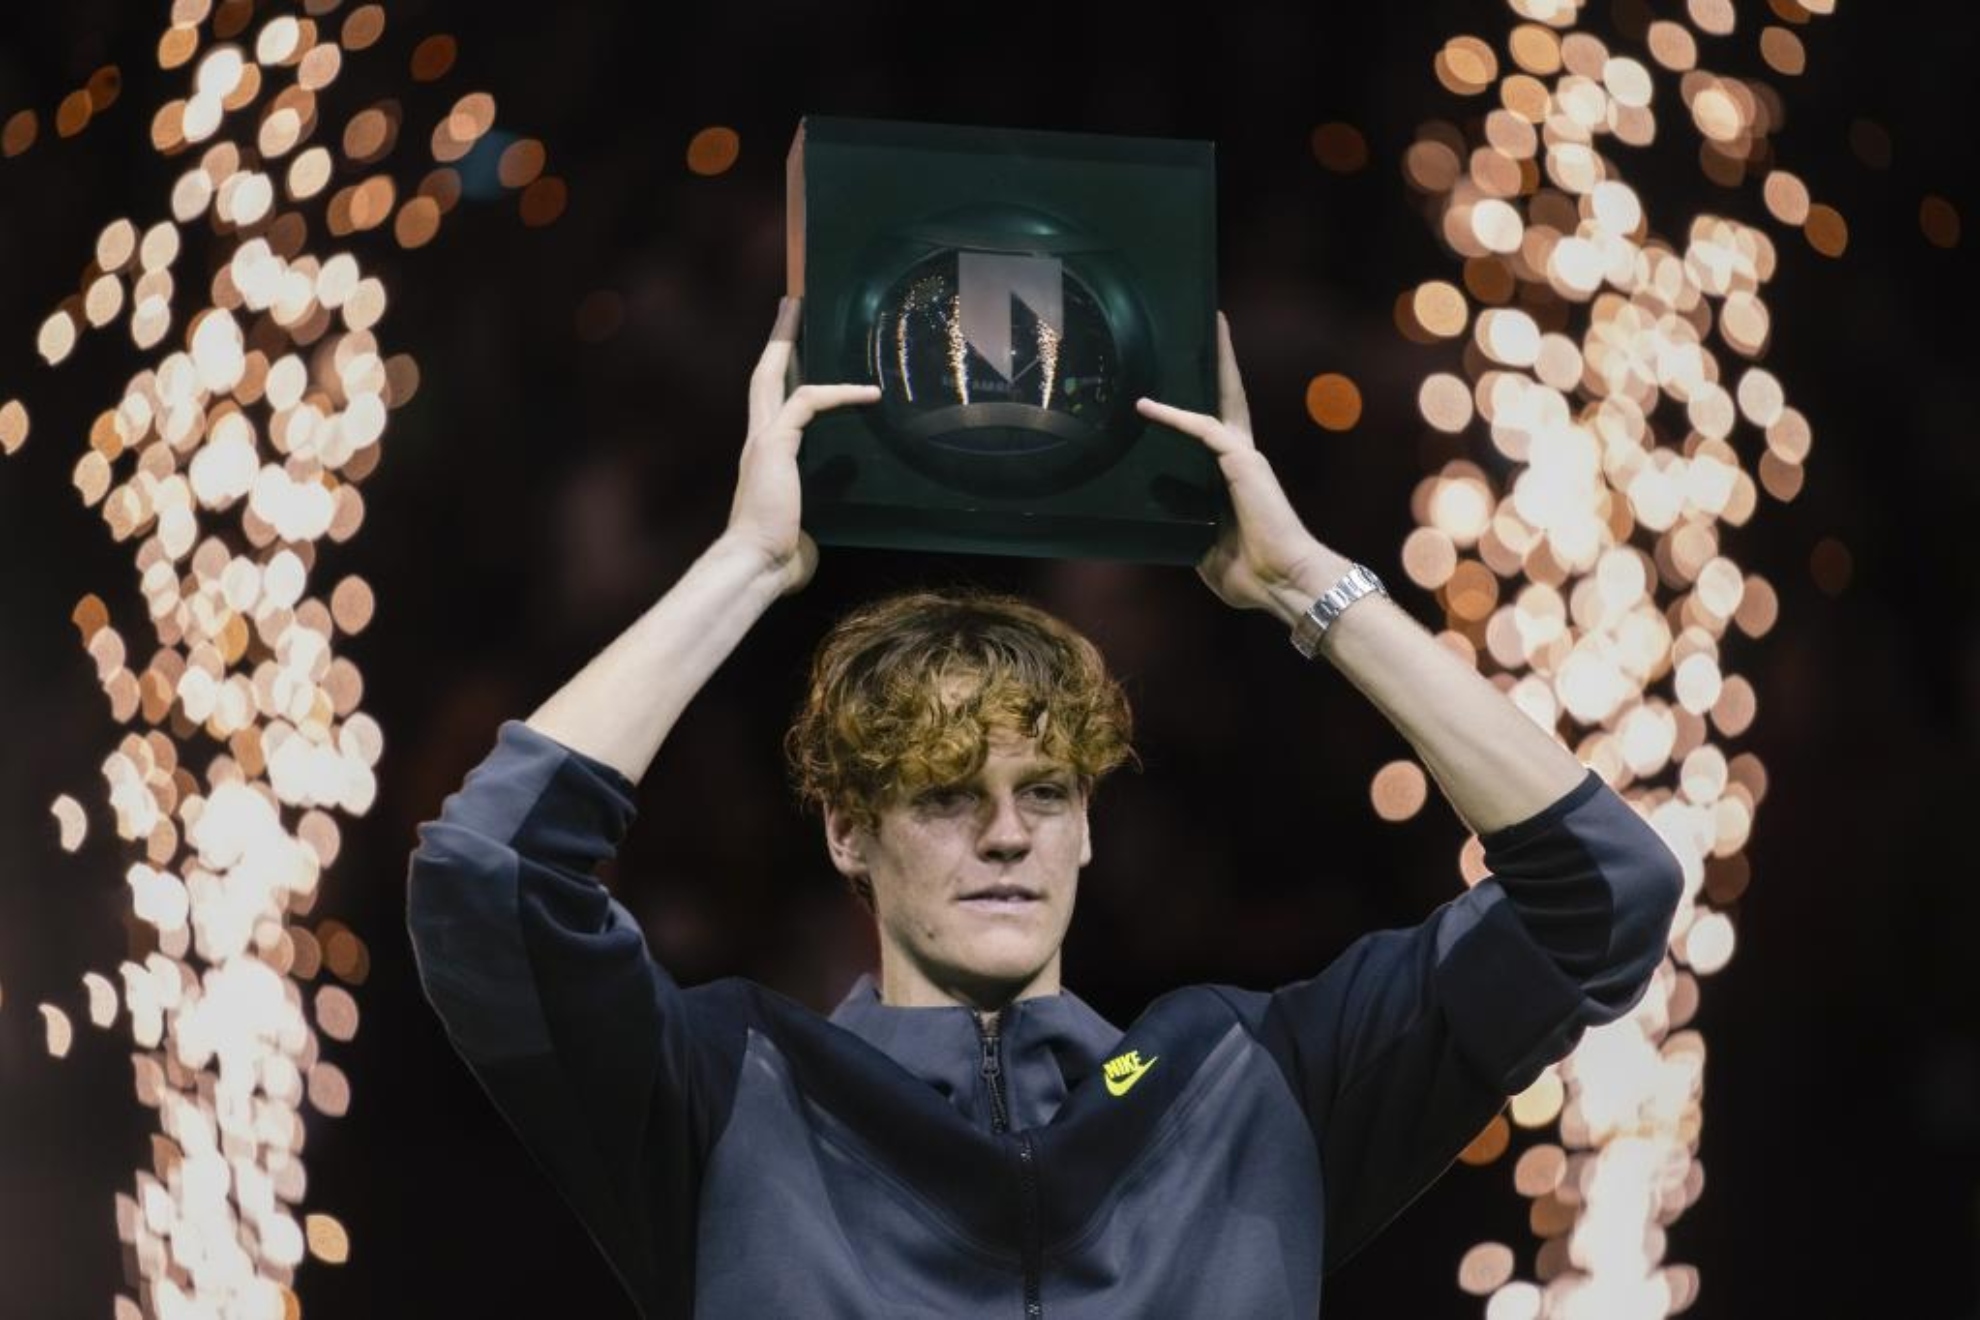 Sinner asciende al podium de la ATP ganando en Rotterdam